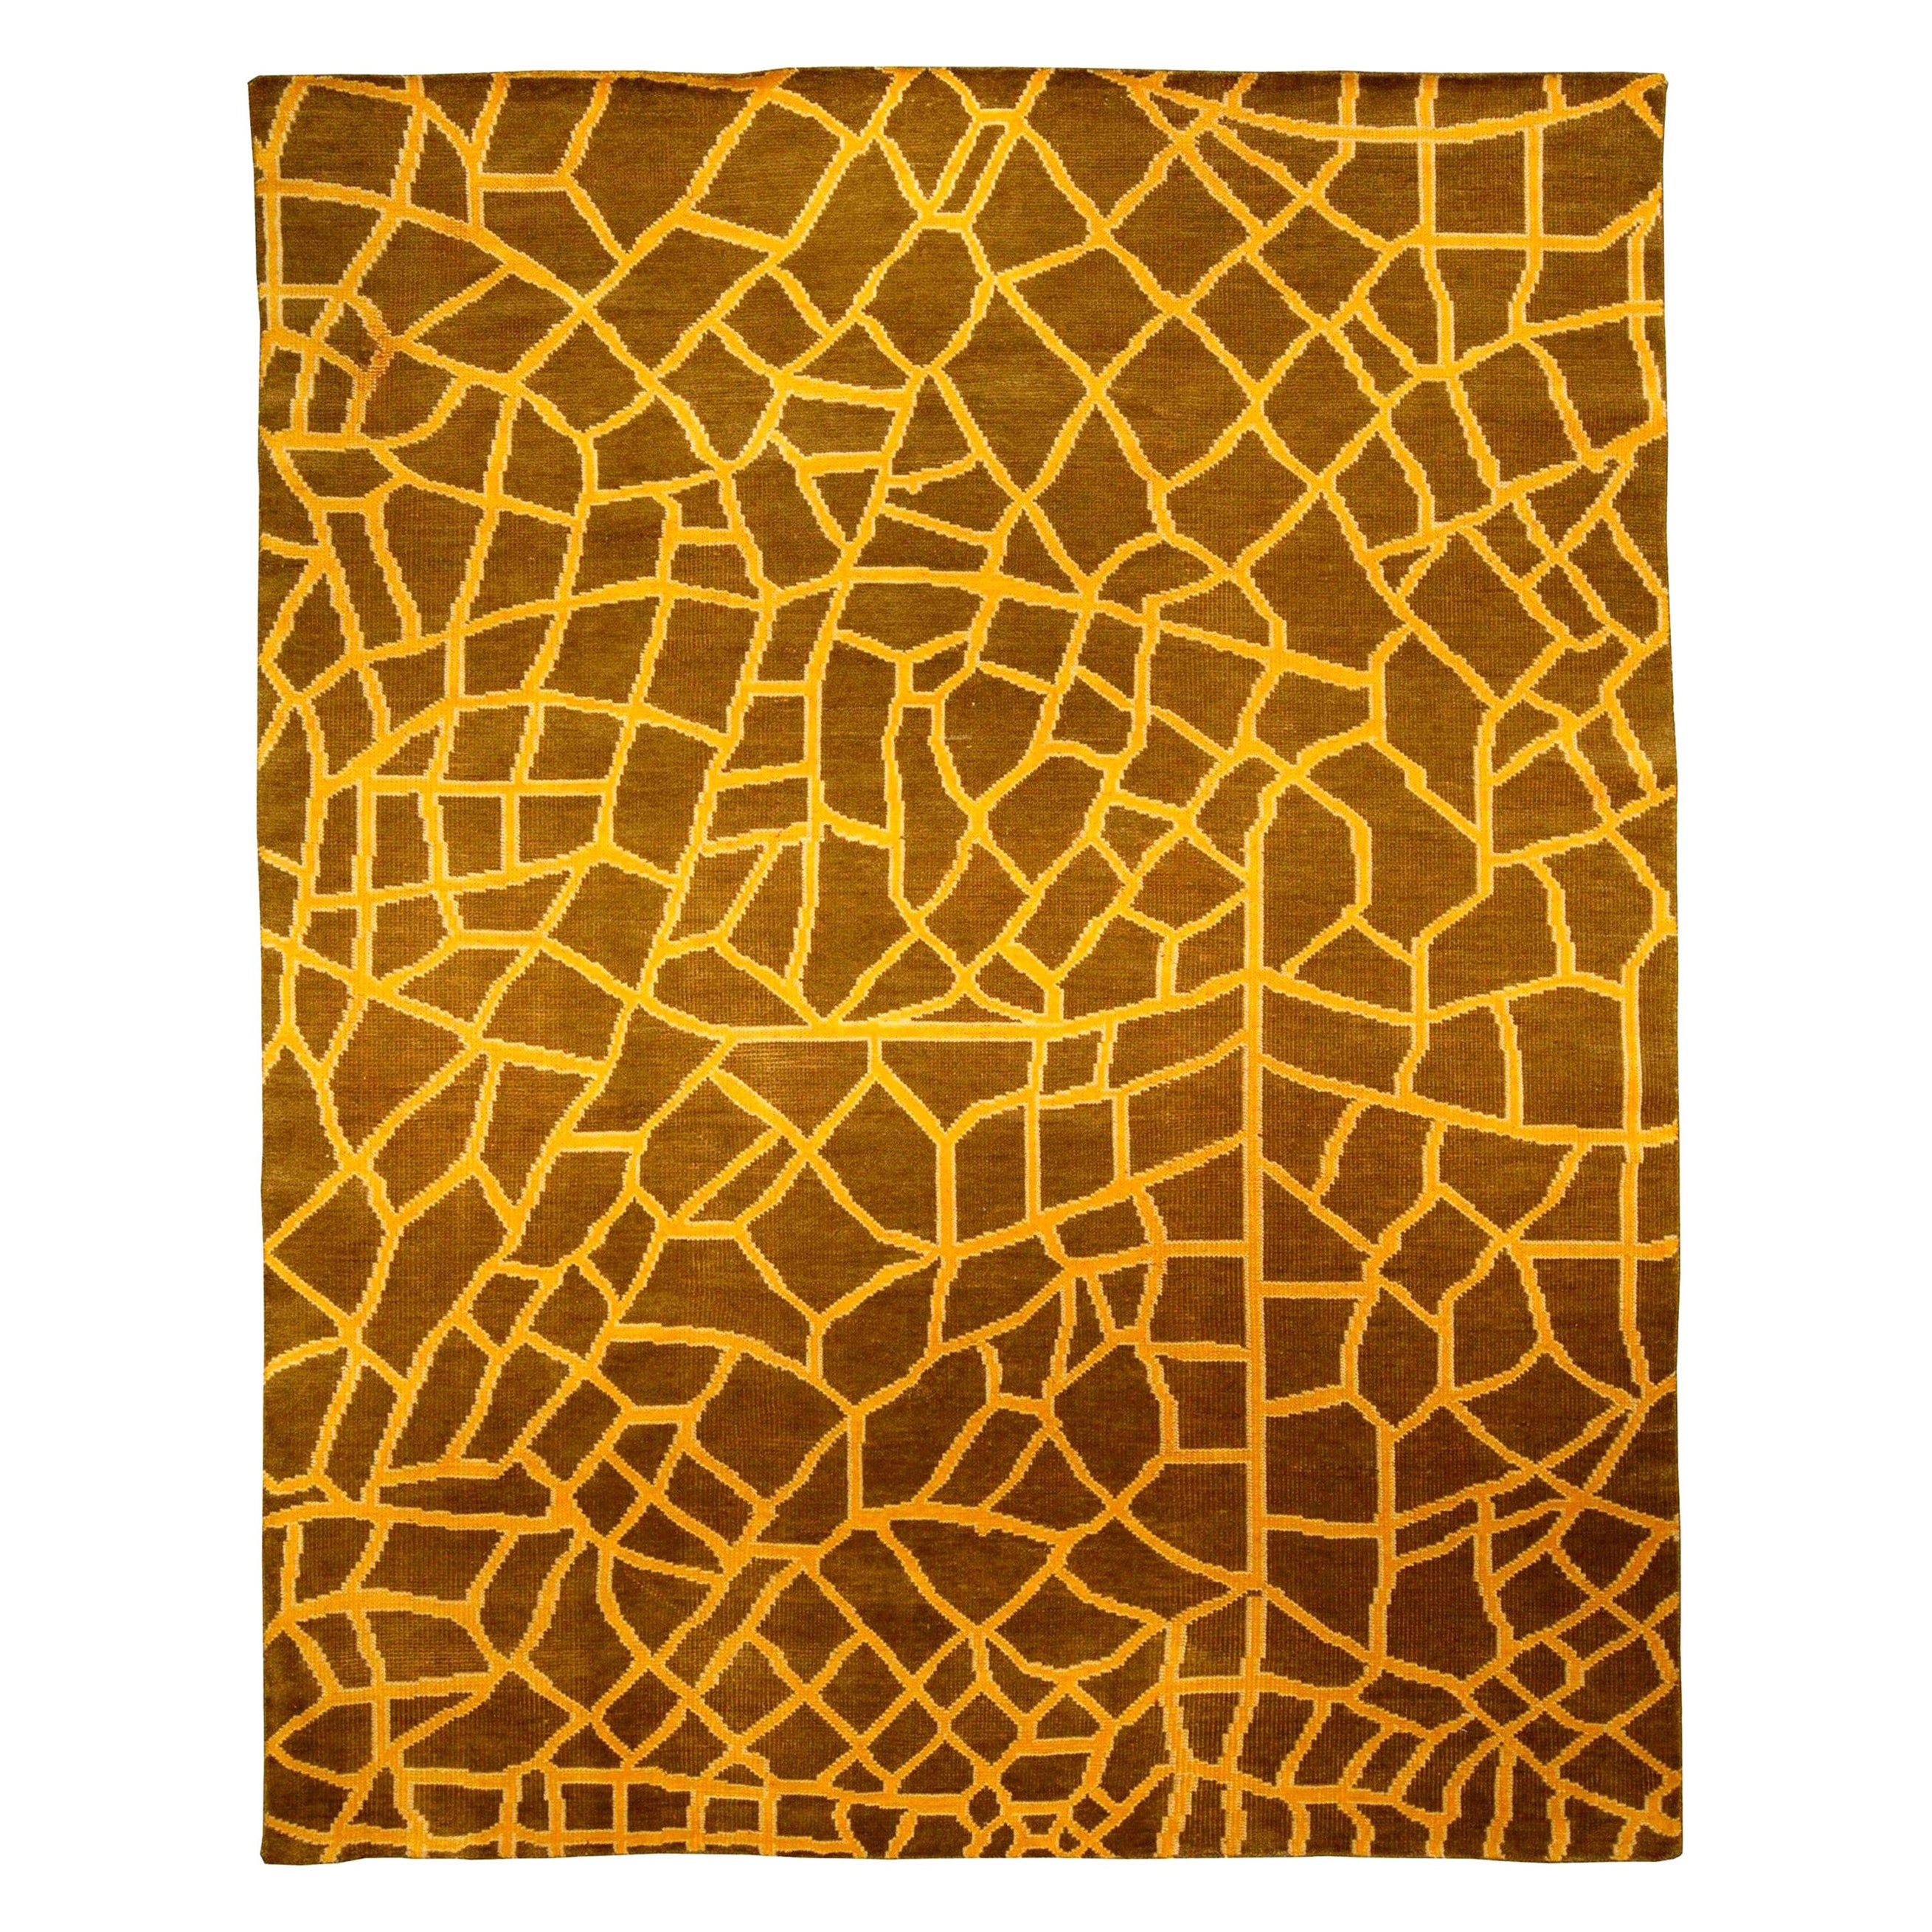 Contemporary Abstract Snake Skin Handmade Wool Rug by Doris Leslie Blau